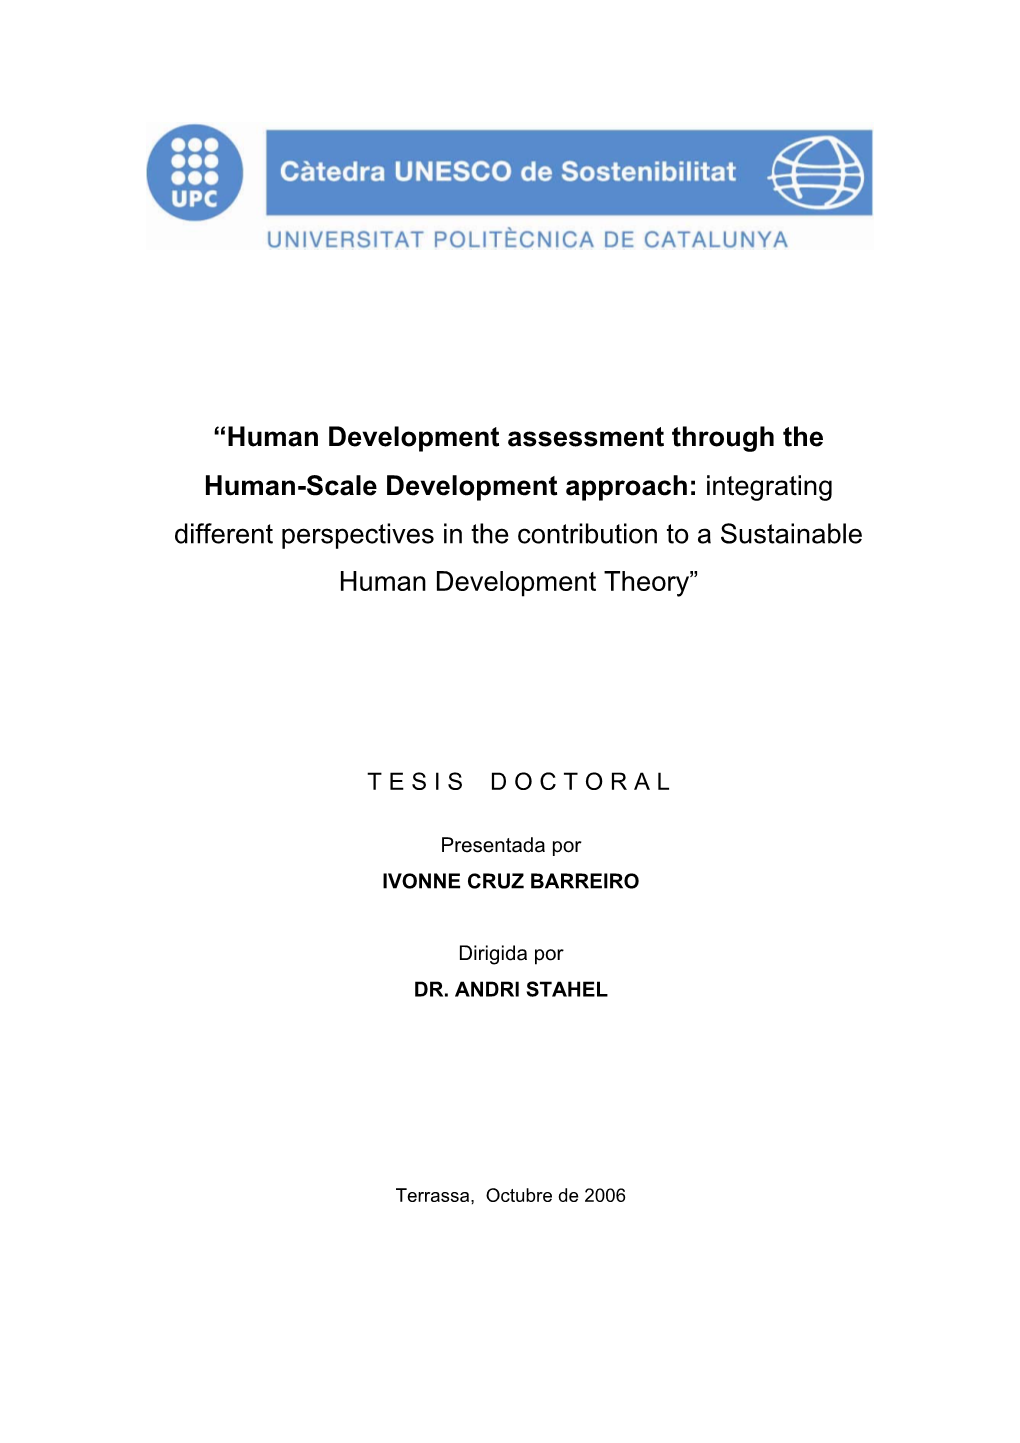 “Human Development Assessment Through the Human-Scale